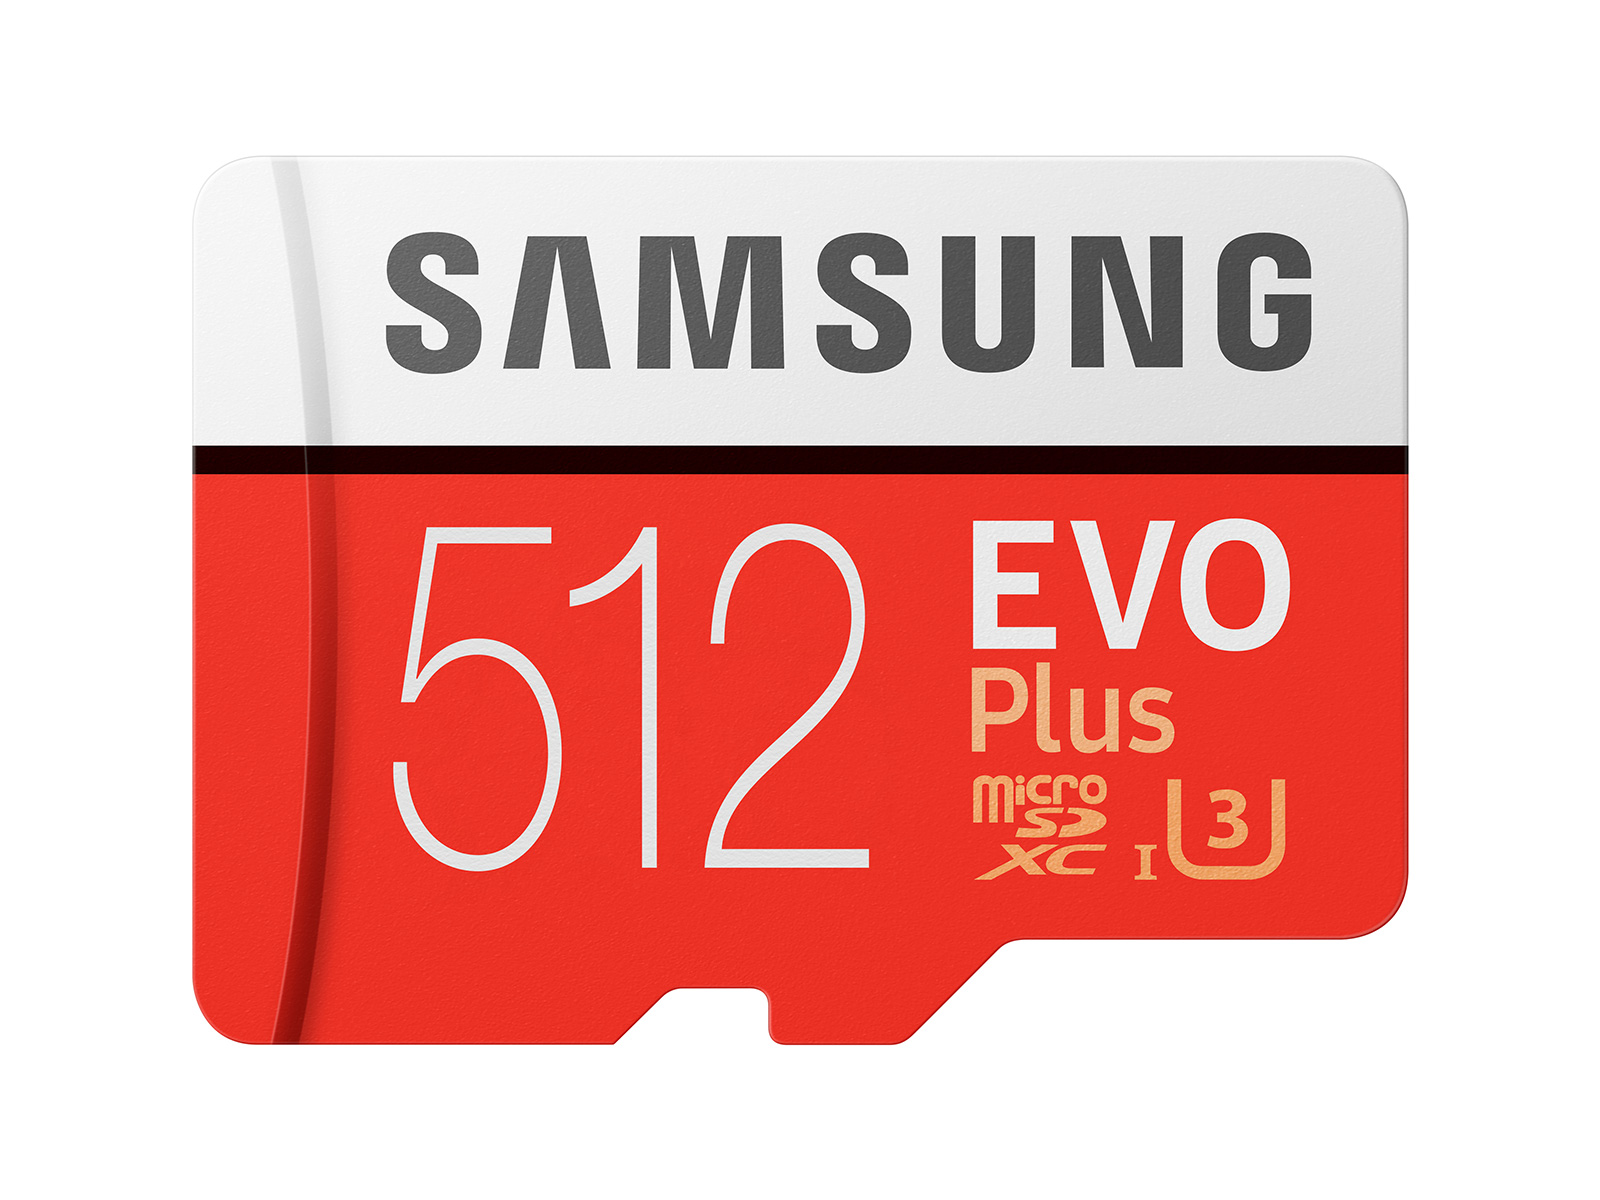 SAMSUNG Evo plus 512GB microSD card